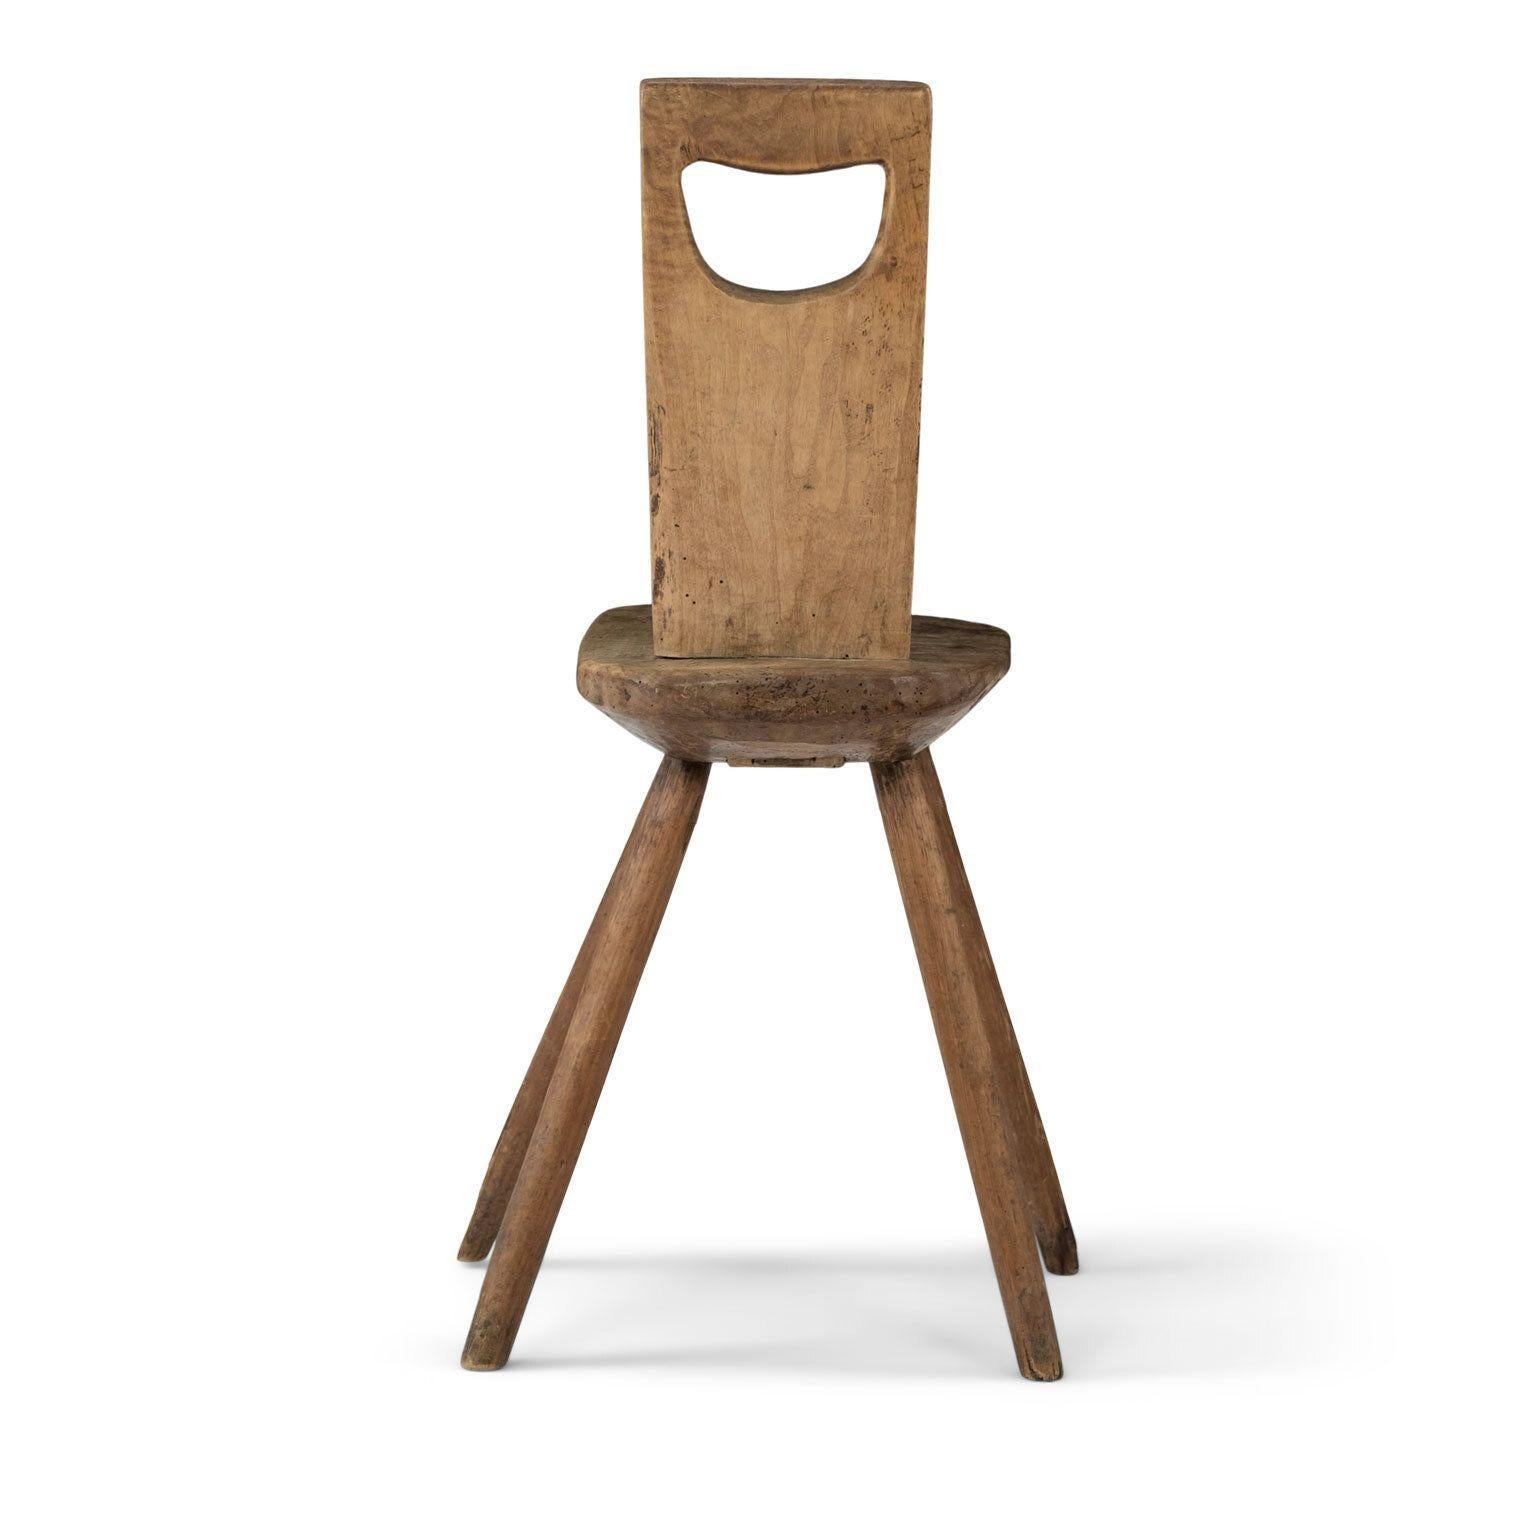 Charming Swedish Rustic Chair 2